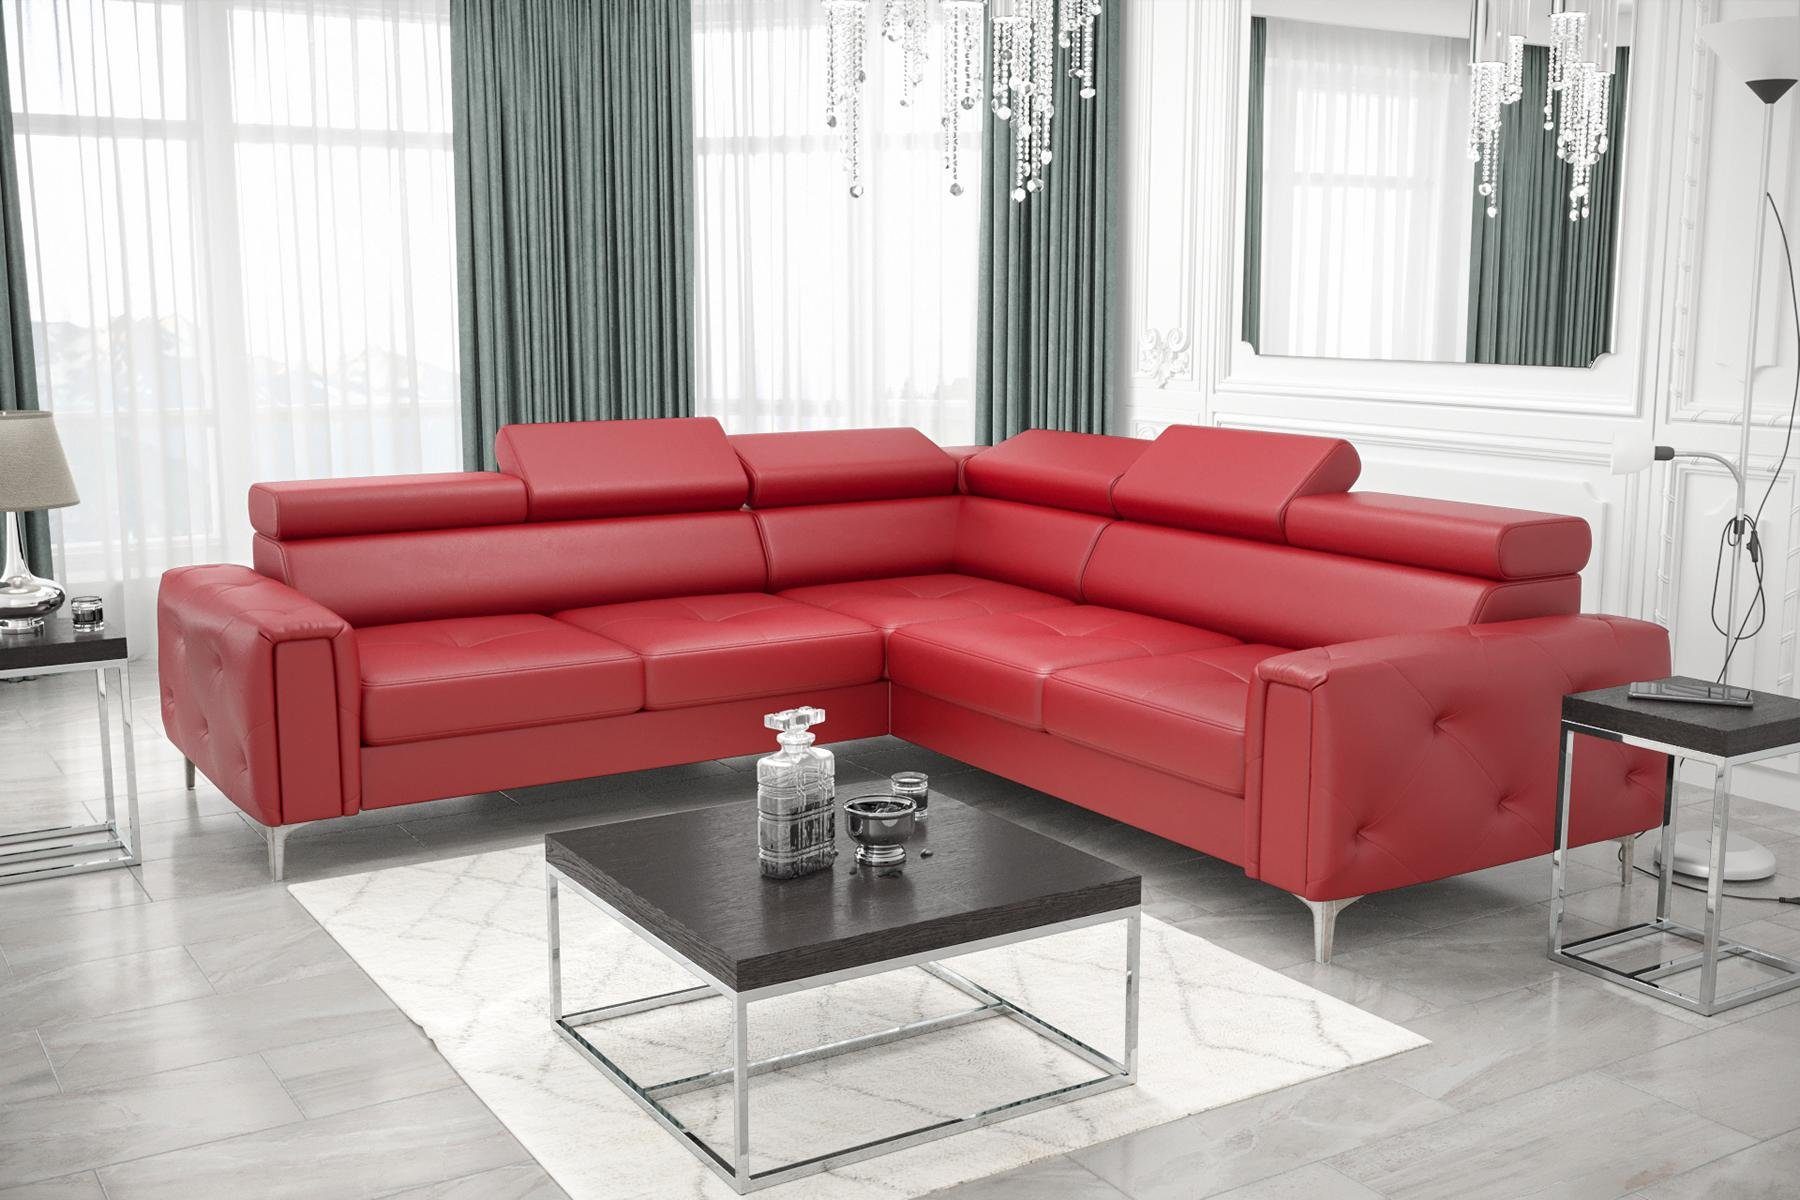 Made in Neu, Sofa Rot Graues Moderne Polster Luxus Wohnlandschaft JVmoebel Ecksofa Europe Ecksofa